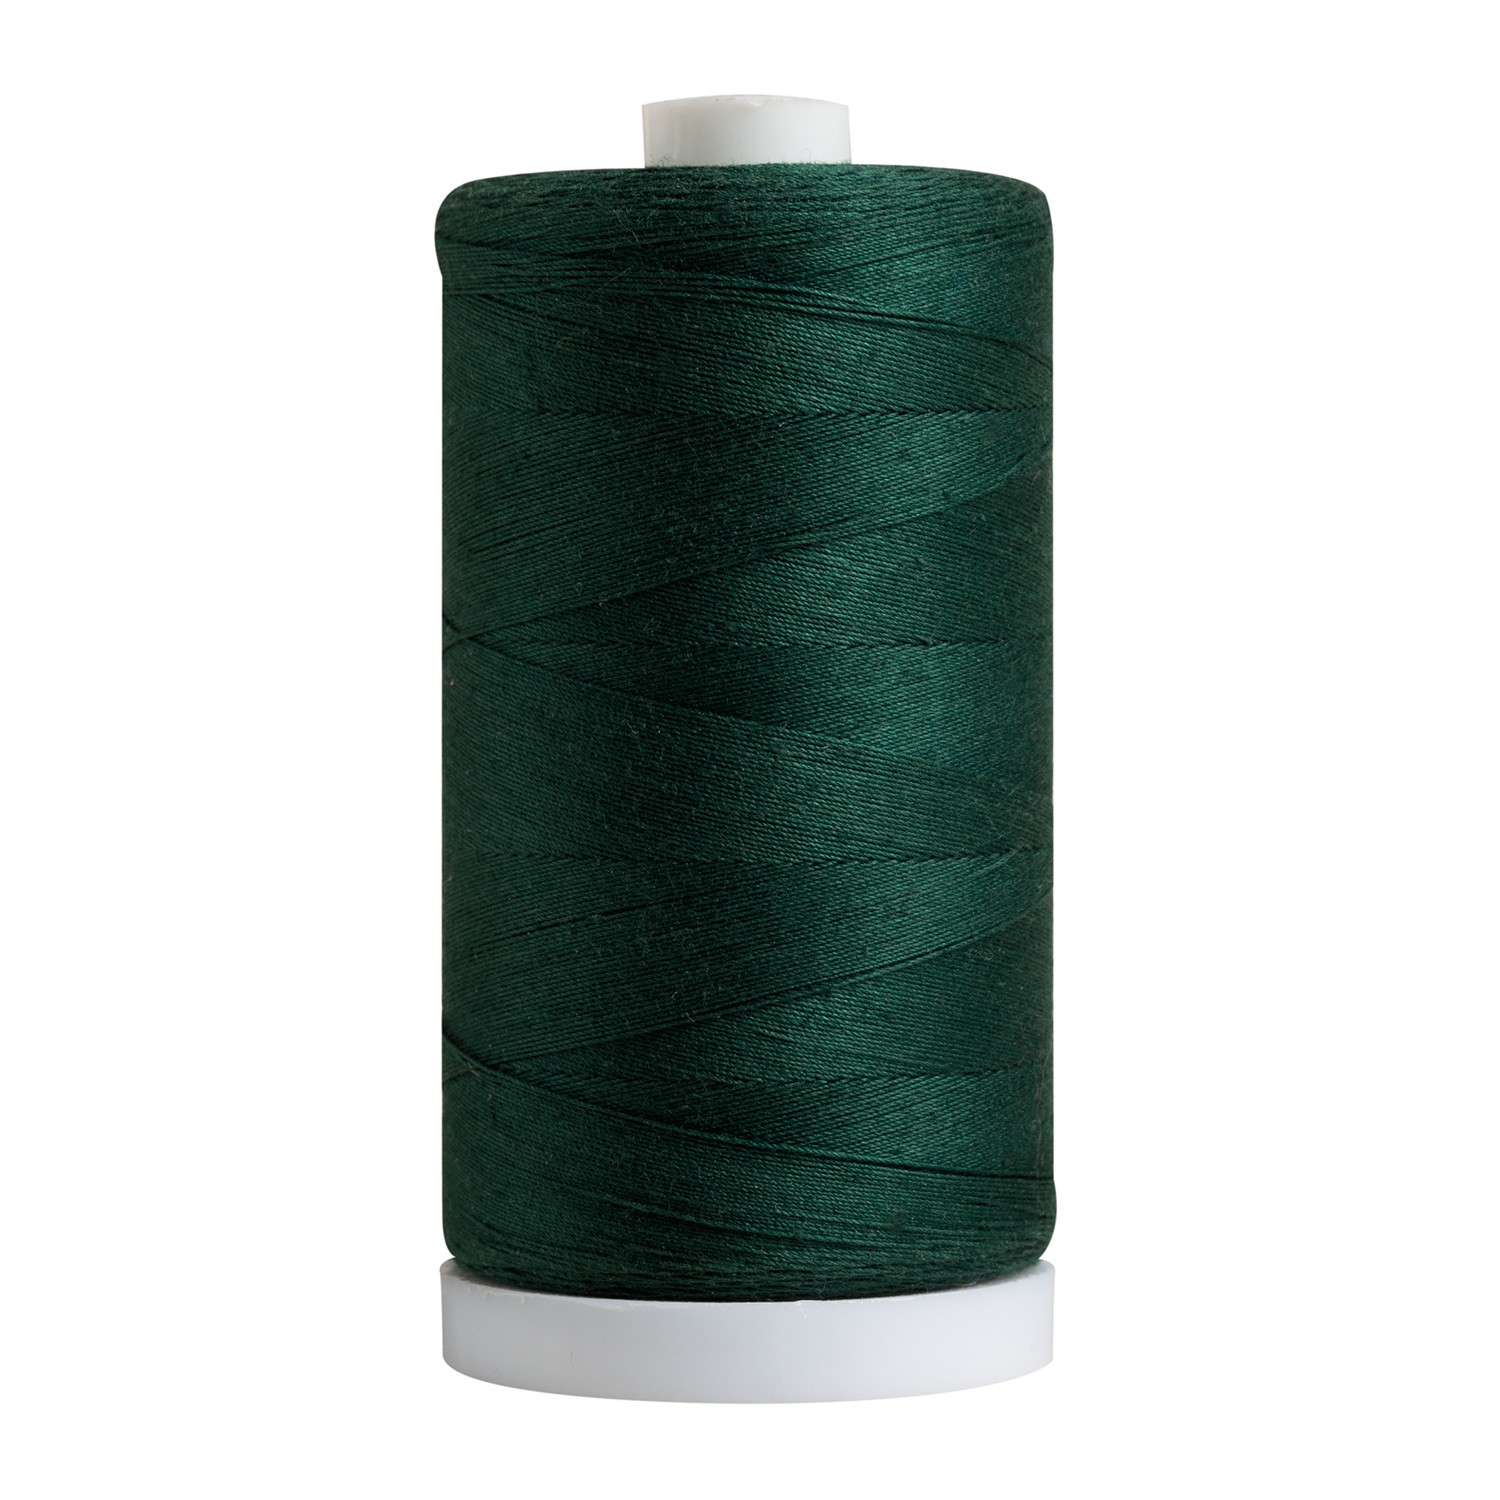  Connecting Threads 100% Cotton Thread Sets - 1200 Yard